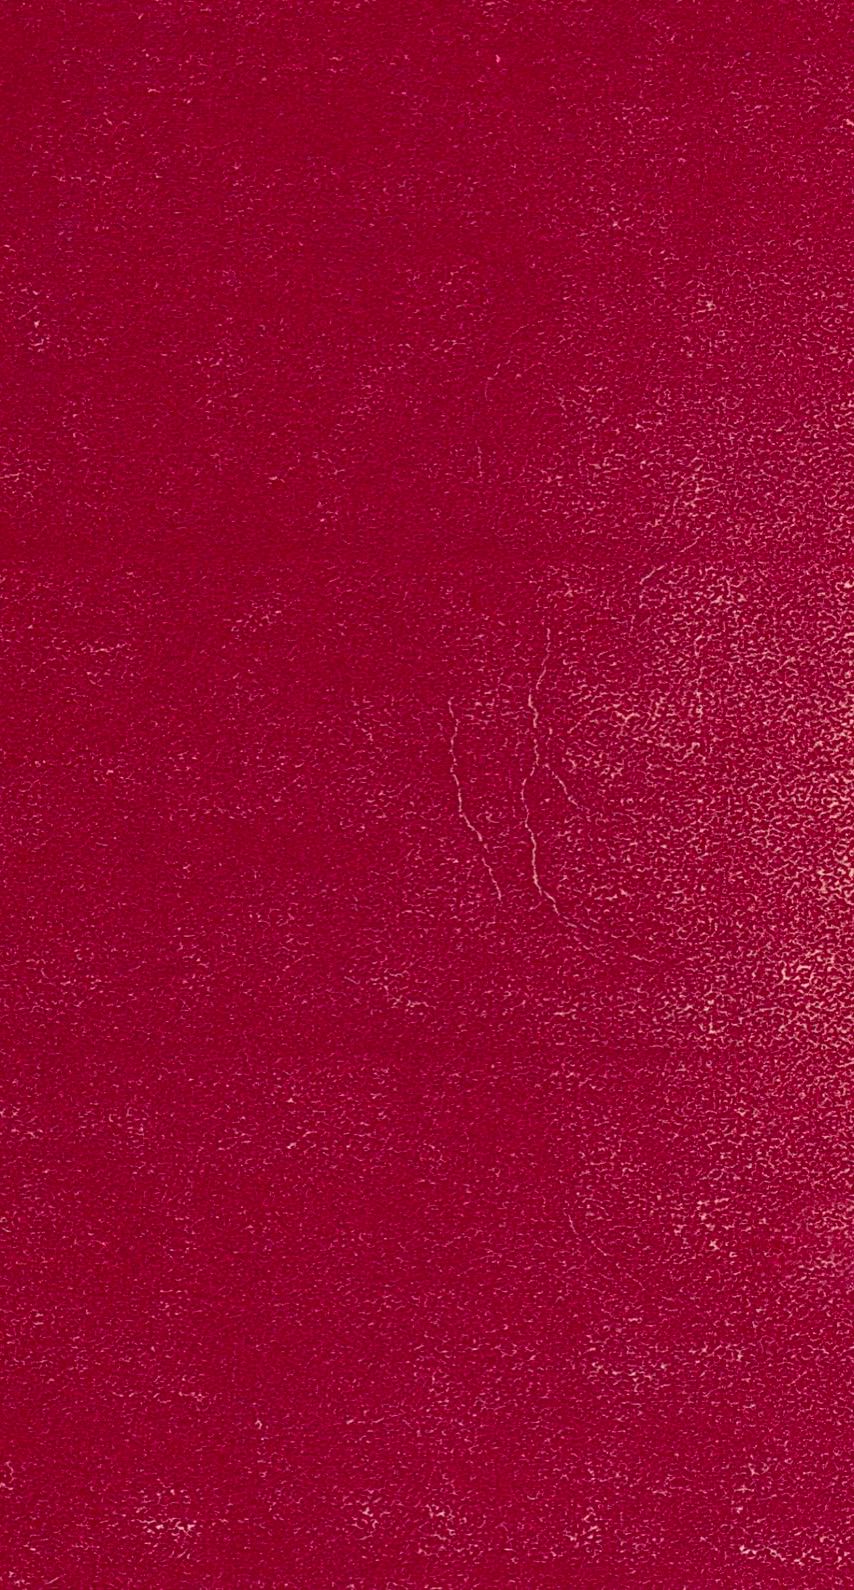 紙赤紫 Wallpaper Sc Iphone6s壁紙